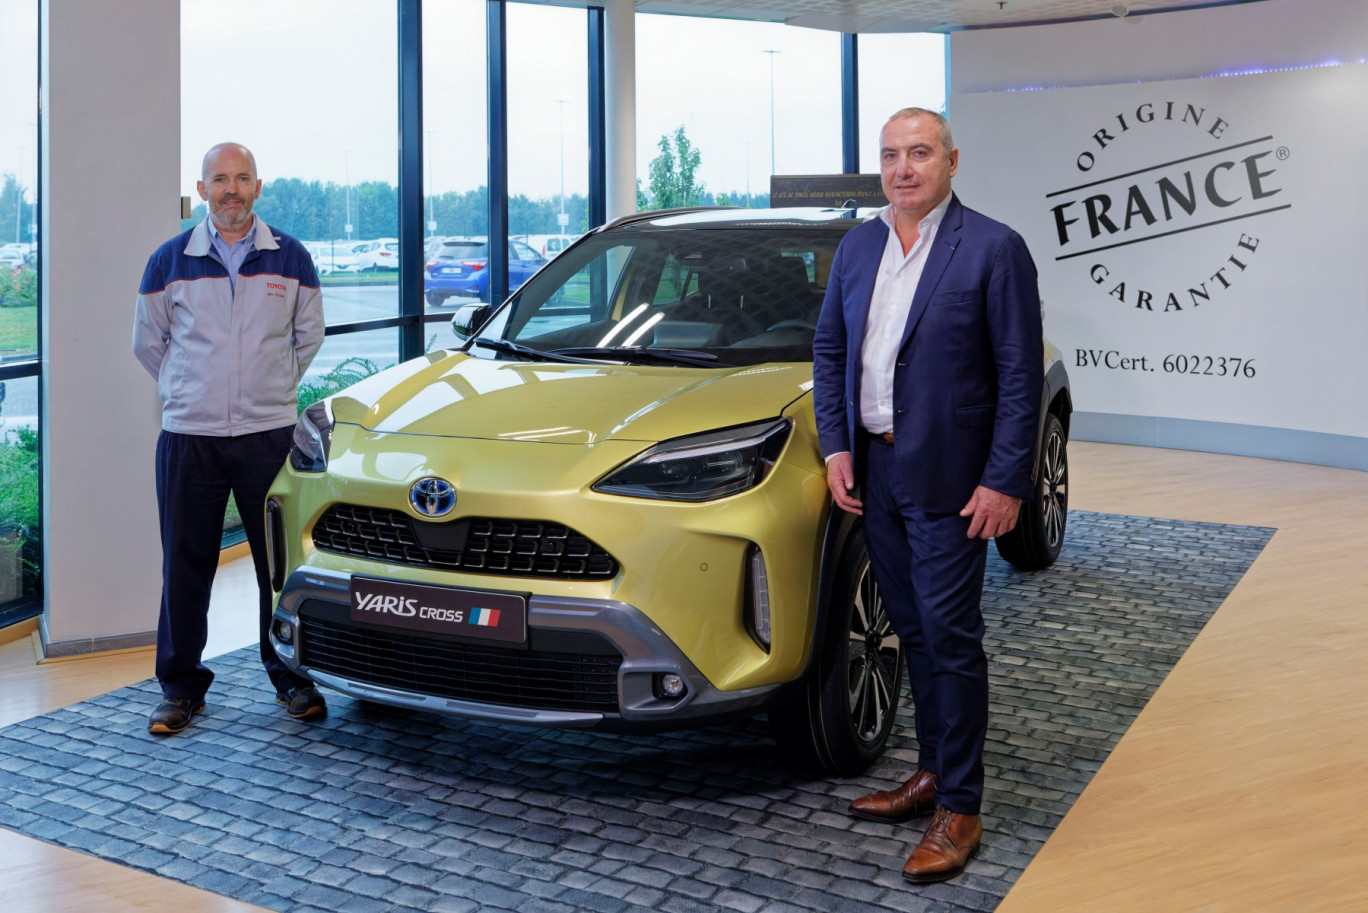 Jim Crosbie, président de Toyota Motor Manufacturing France, et Gilles Attaf, président de la certification "Origine France garantie".